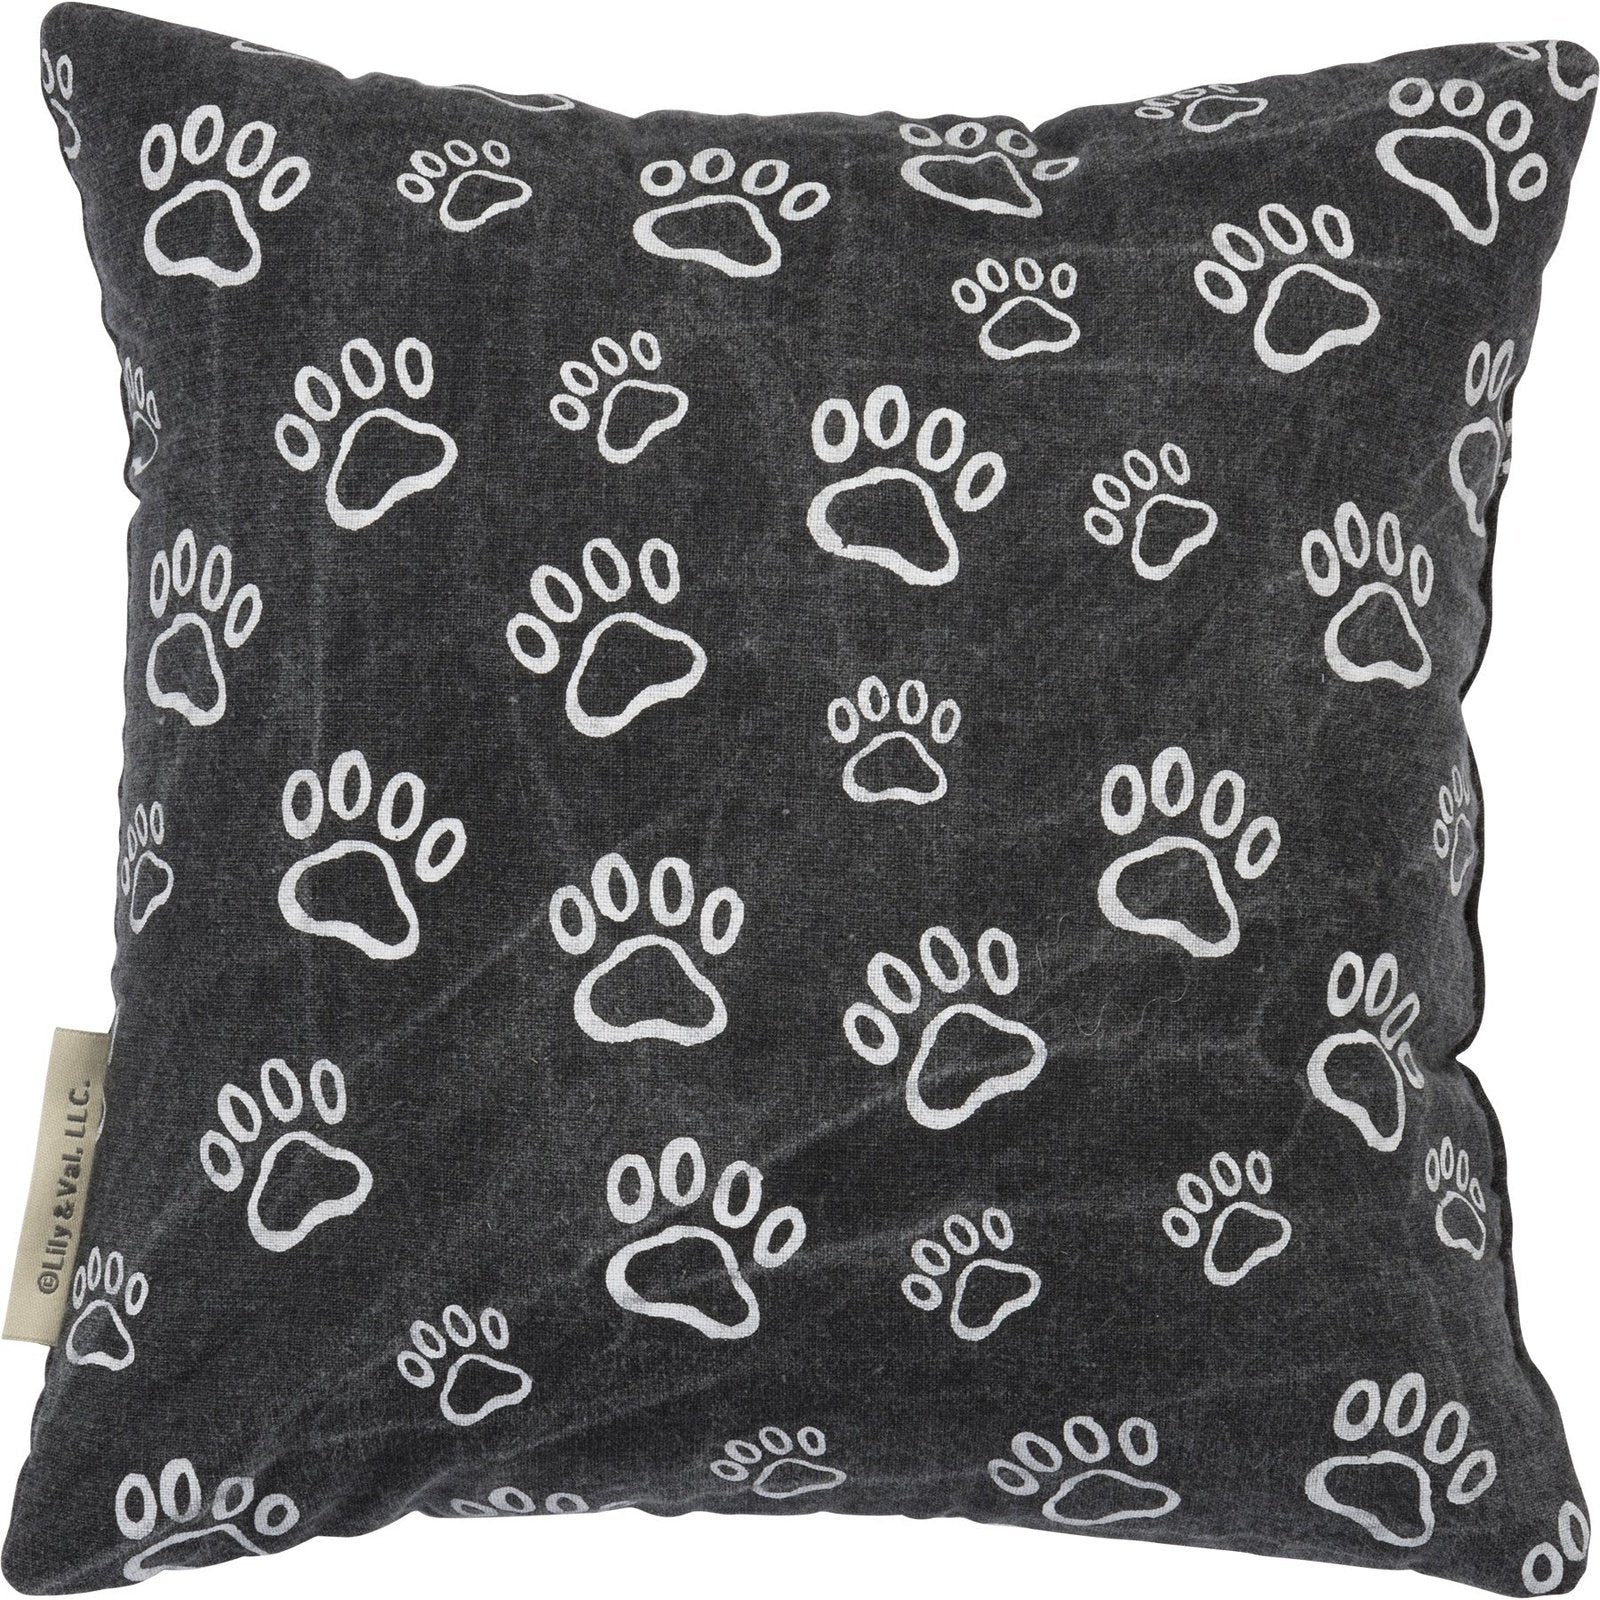 Dog Lover Pillow SolagoHome